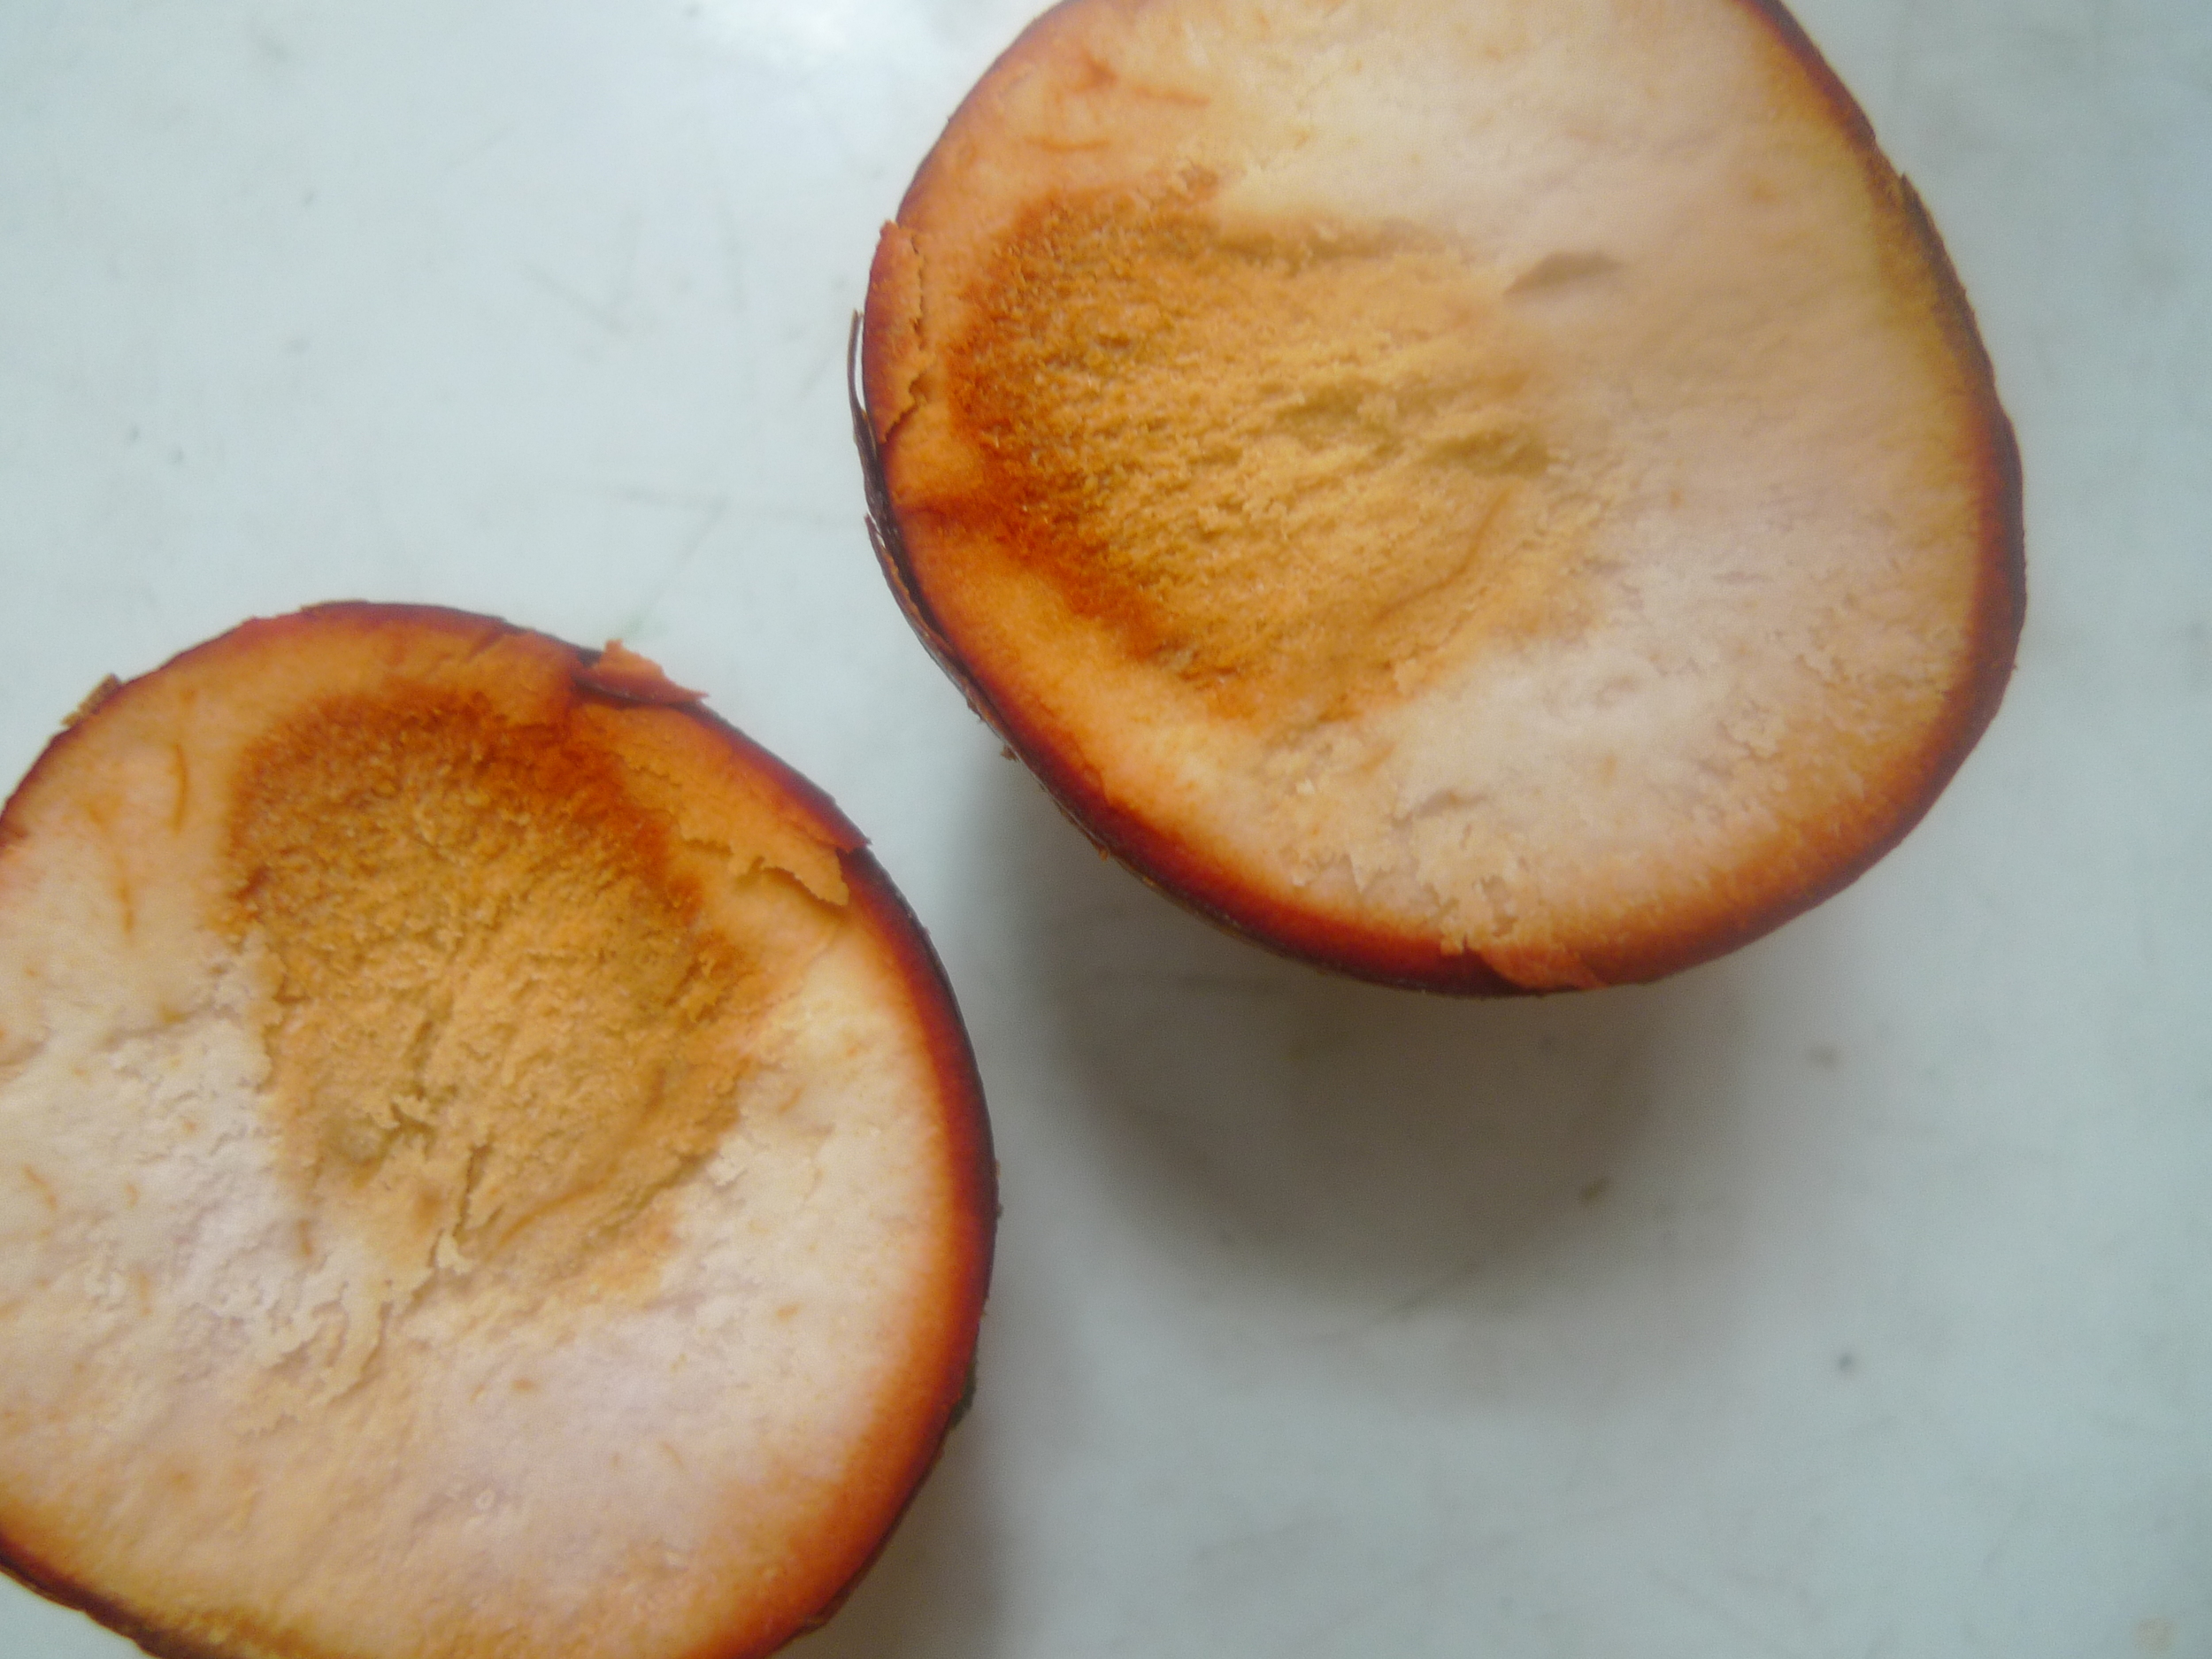 Avocado pits for dying natural pink shades.